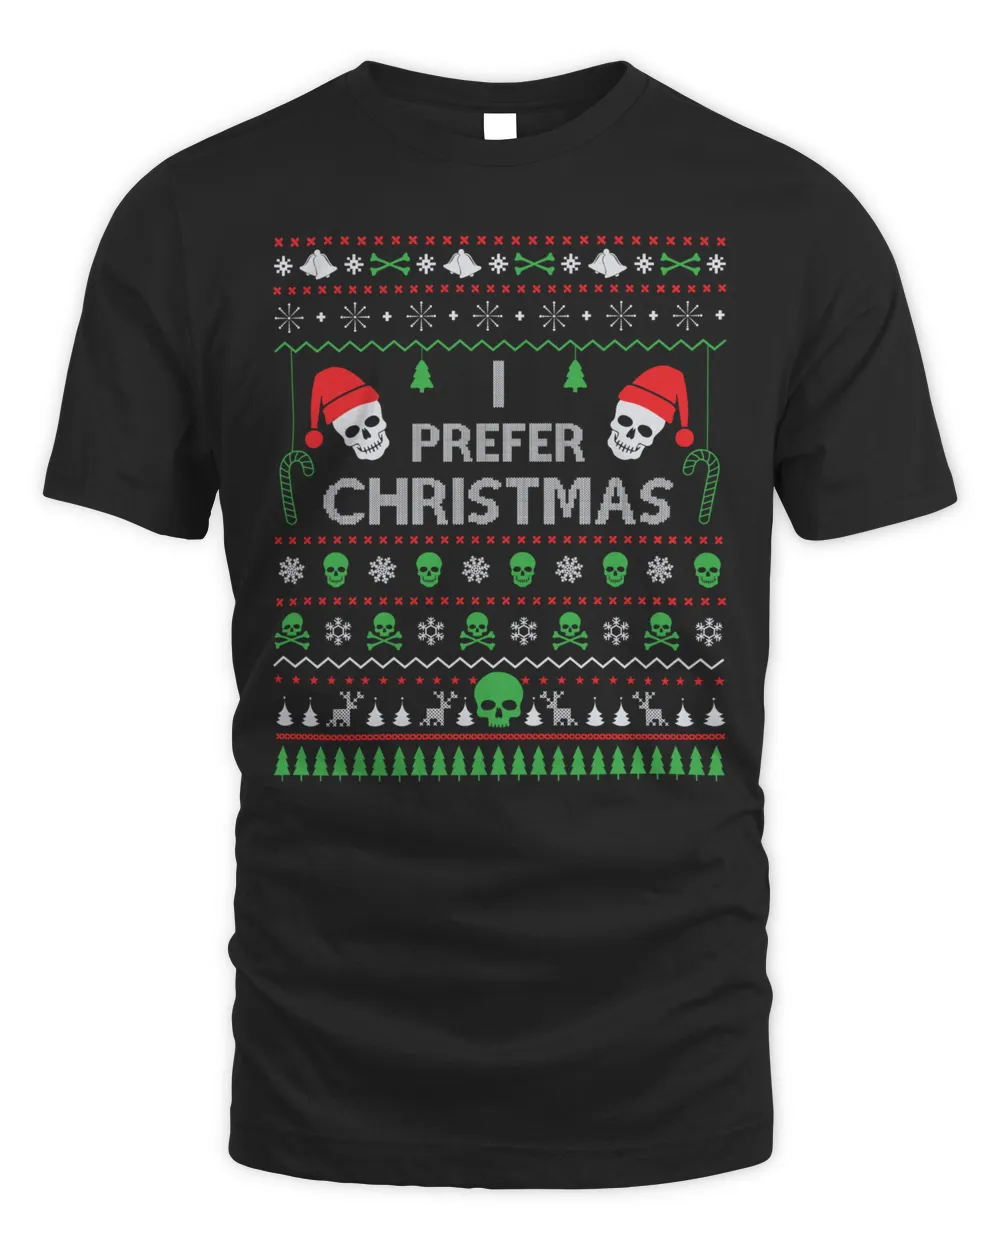 I Prefer Christmas Sweater Funny Ugly Xmas Sweatshirt